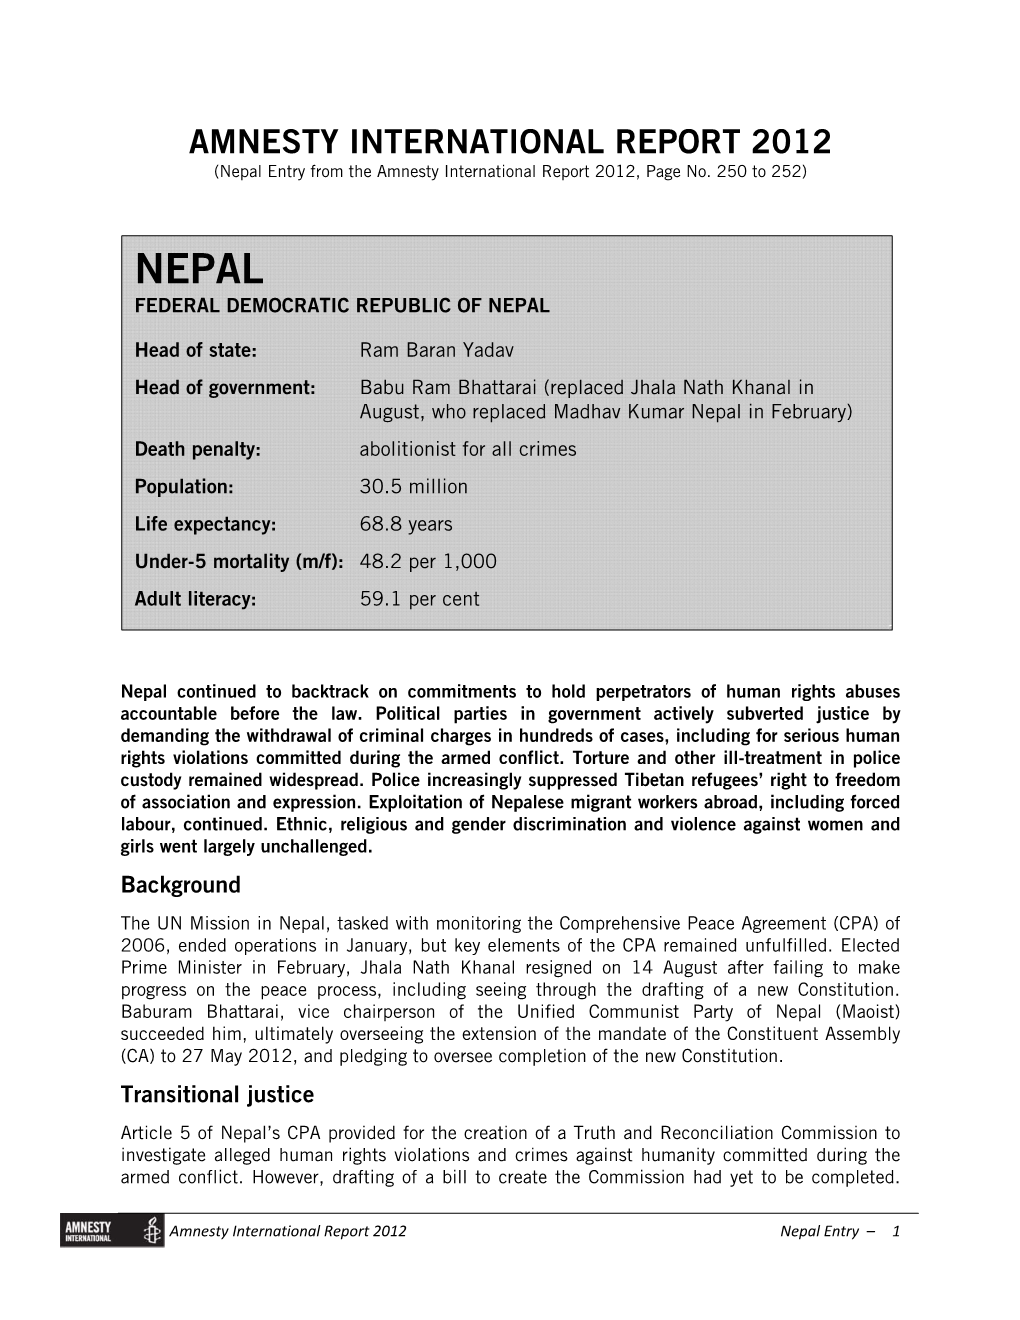 AMNESTY INTERNATIONAL REPORT 2012 (Nepal Entry from the Amnesty International Report 2012, Page No